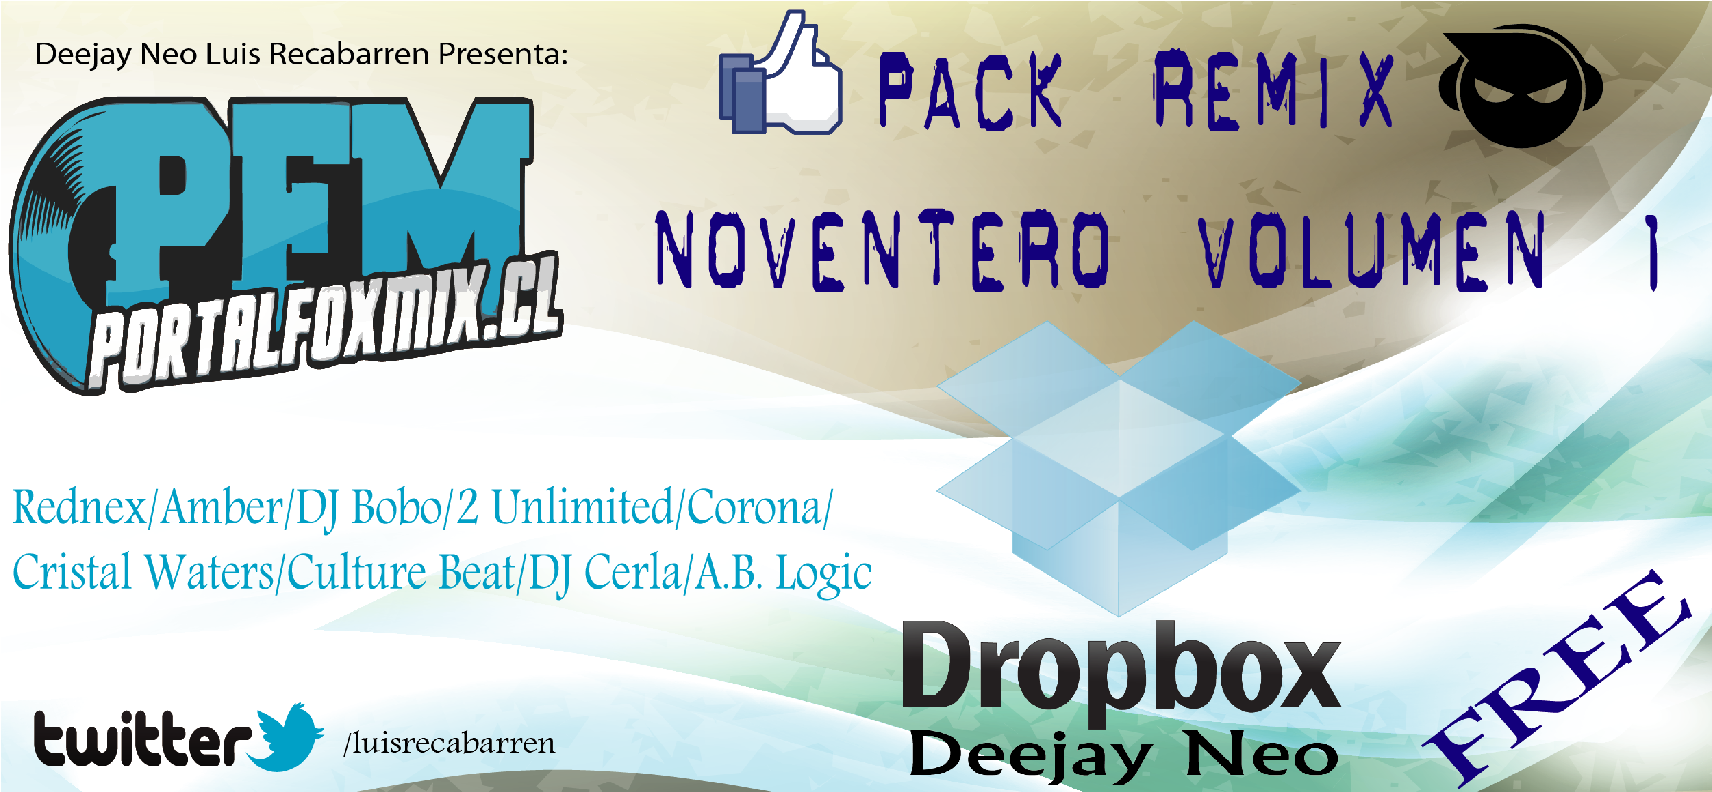 5120: Deejay Neo Luis Recabarren: Pack Noventero Remixes (Vol.1) 13 Remix Premiun